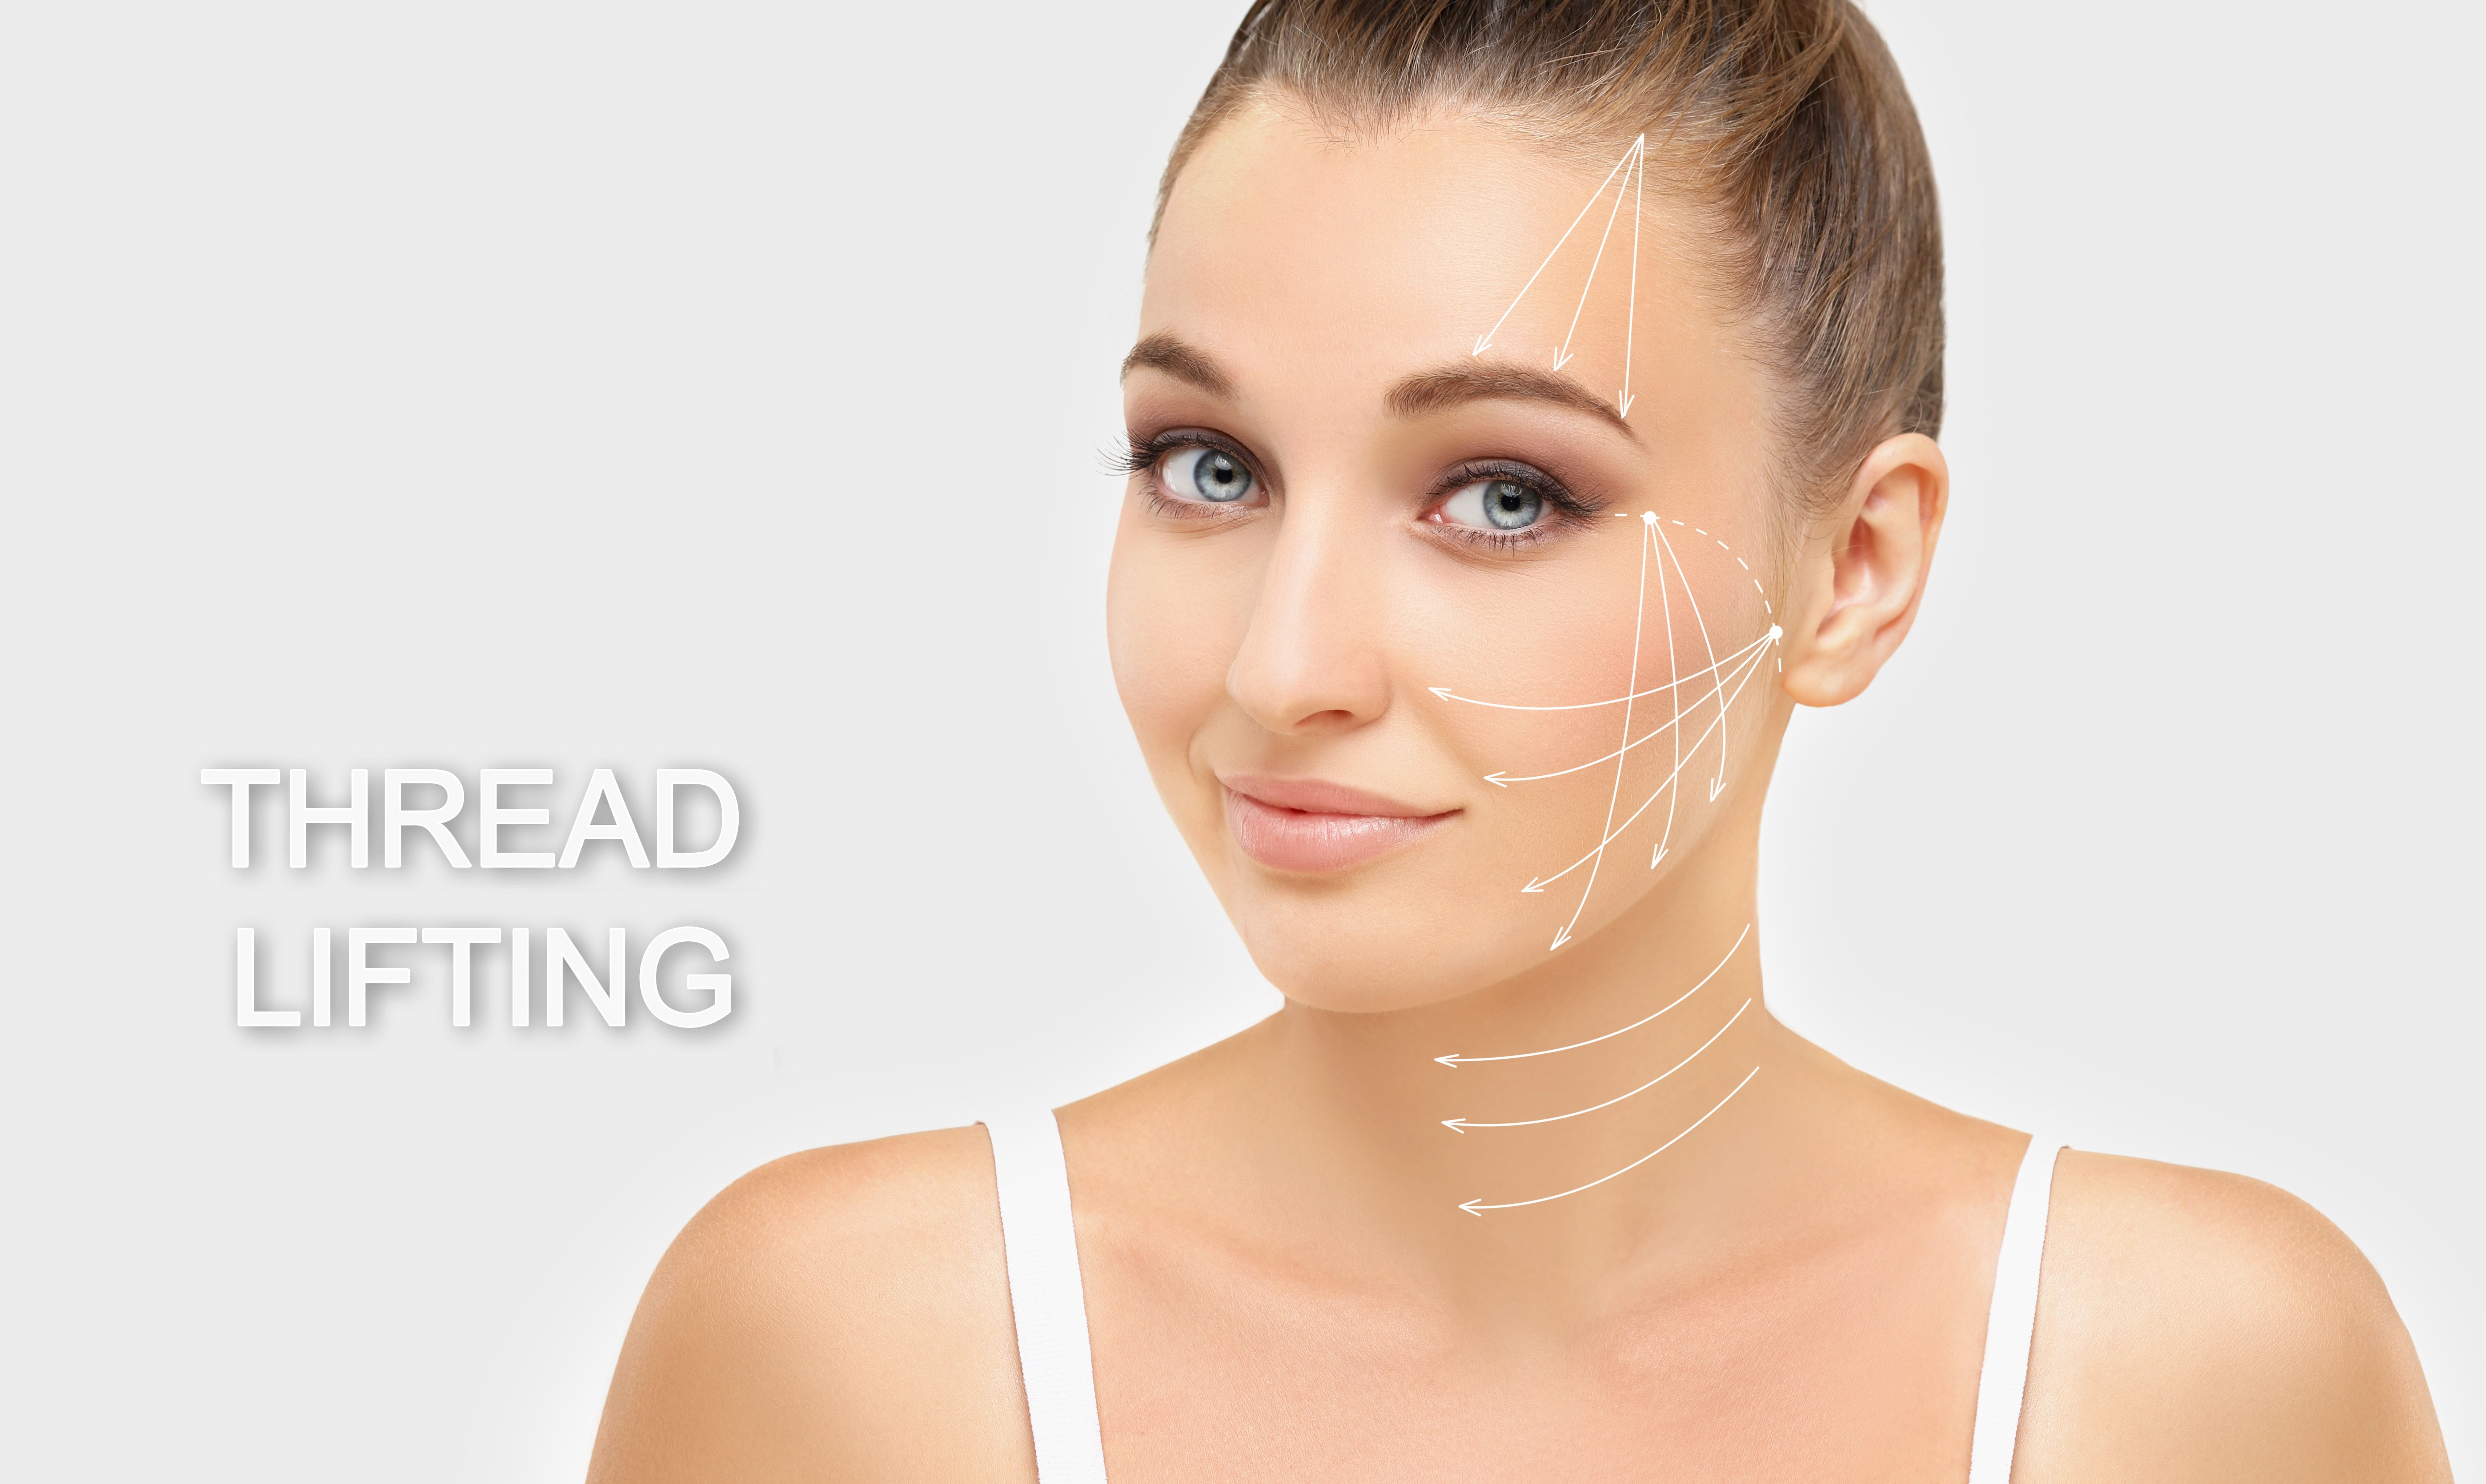 Thread Lifting in Facial Rejuvenation